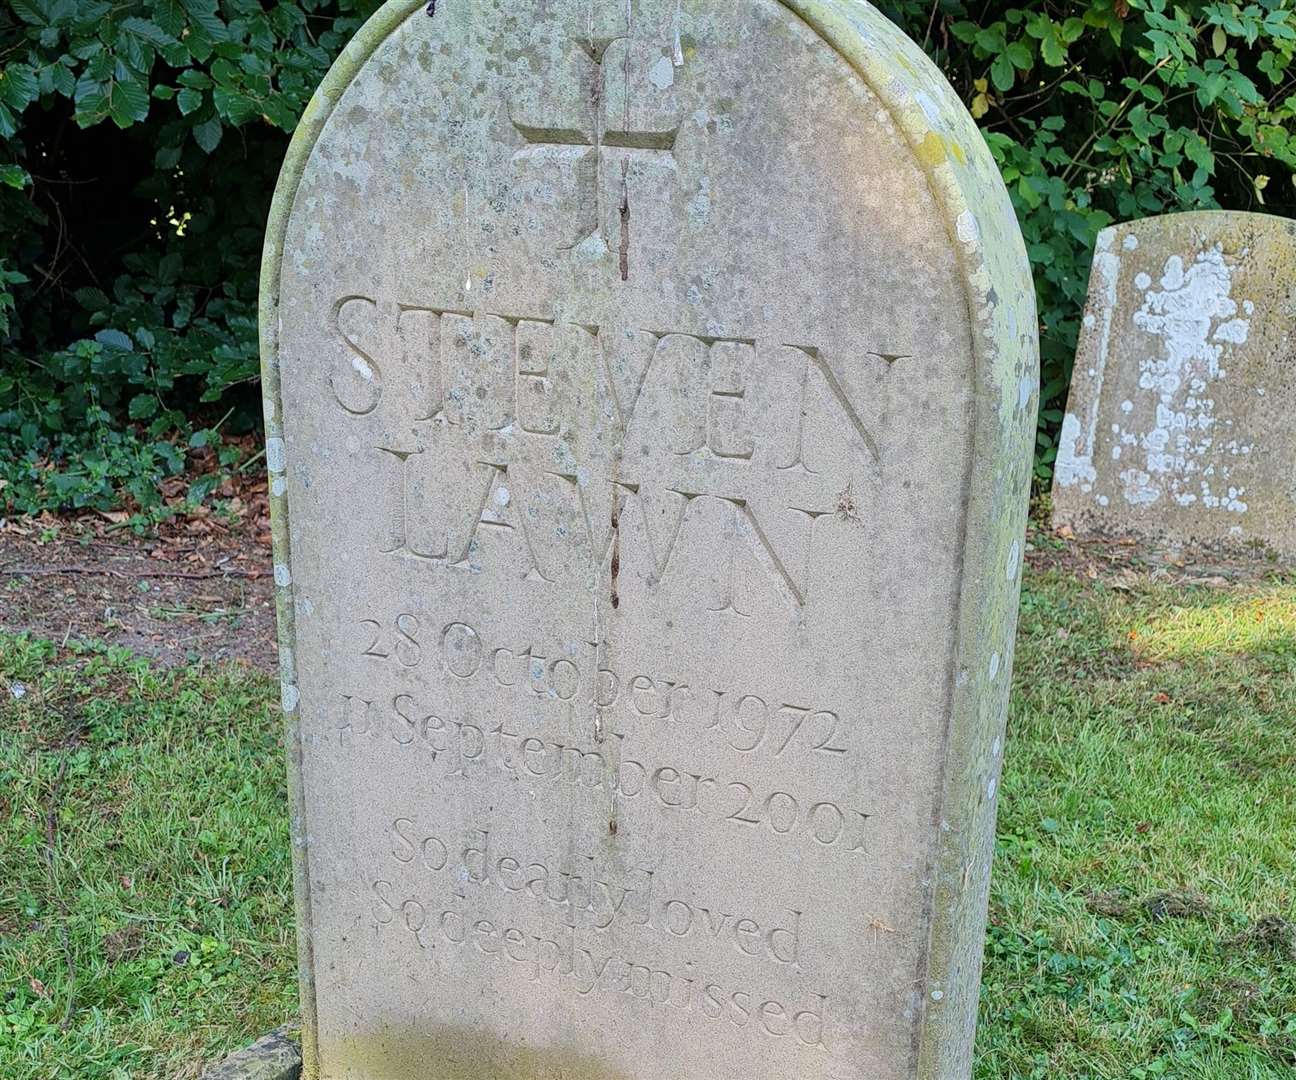 Steven Lawn's grave at Elmstone Church, near Wingham